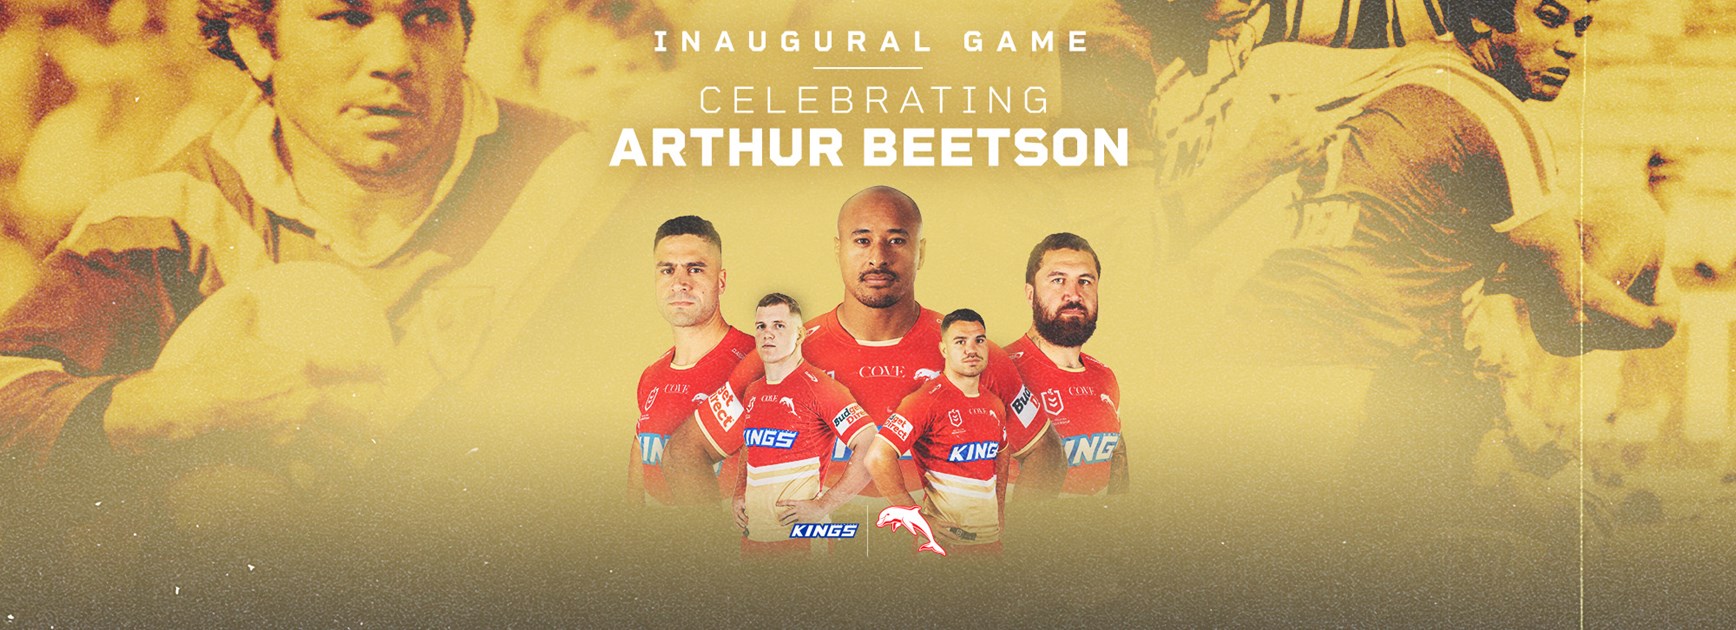 Inaugural game celebrating Arthur Beetson